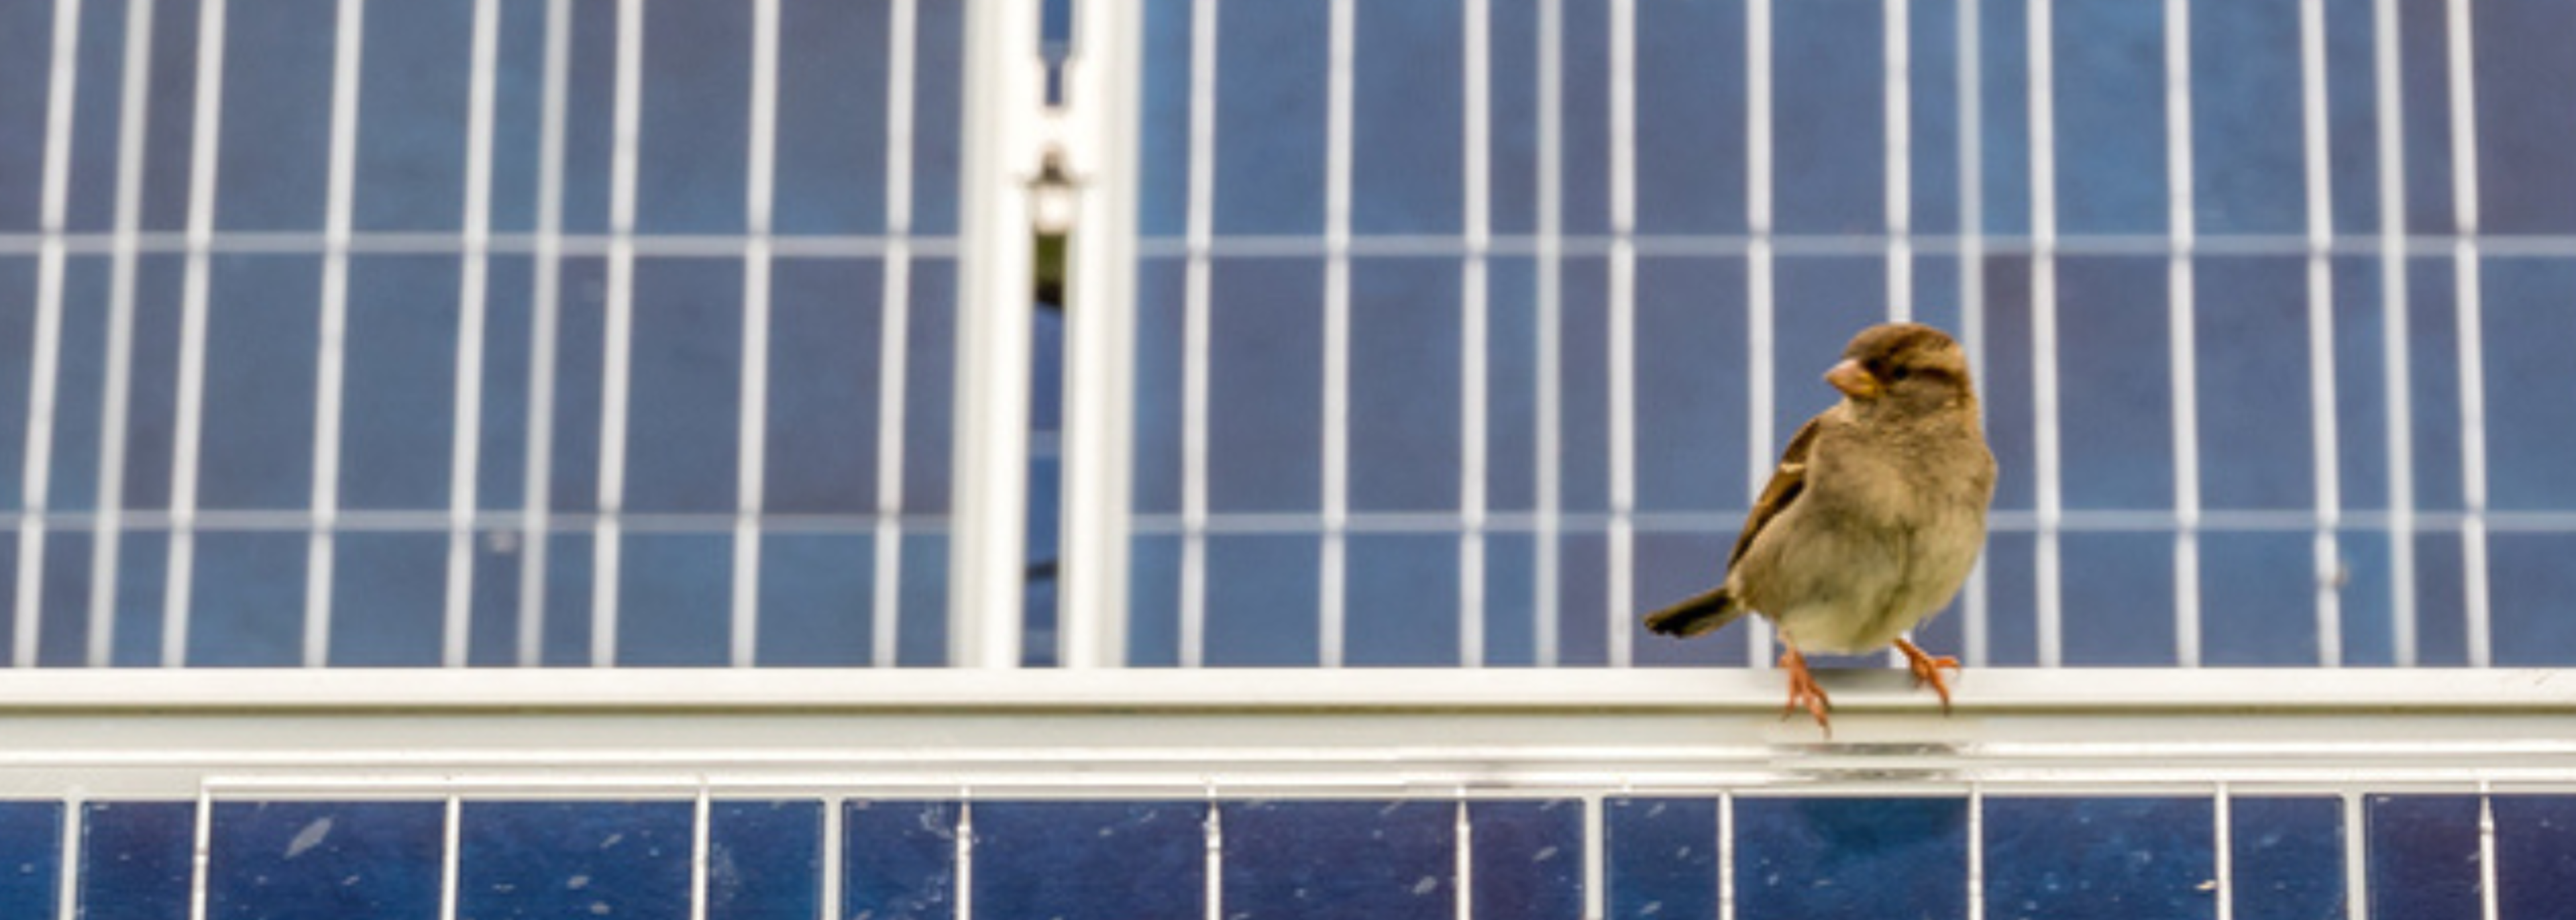 Solar farms provide havens for wildlife under threat